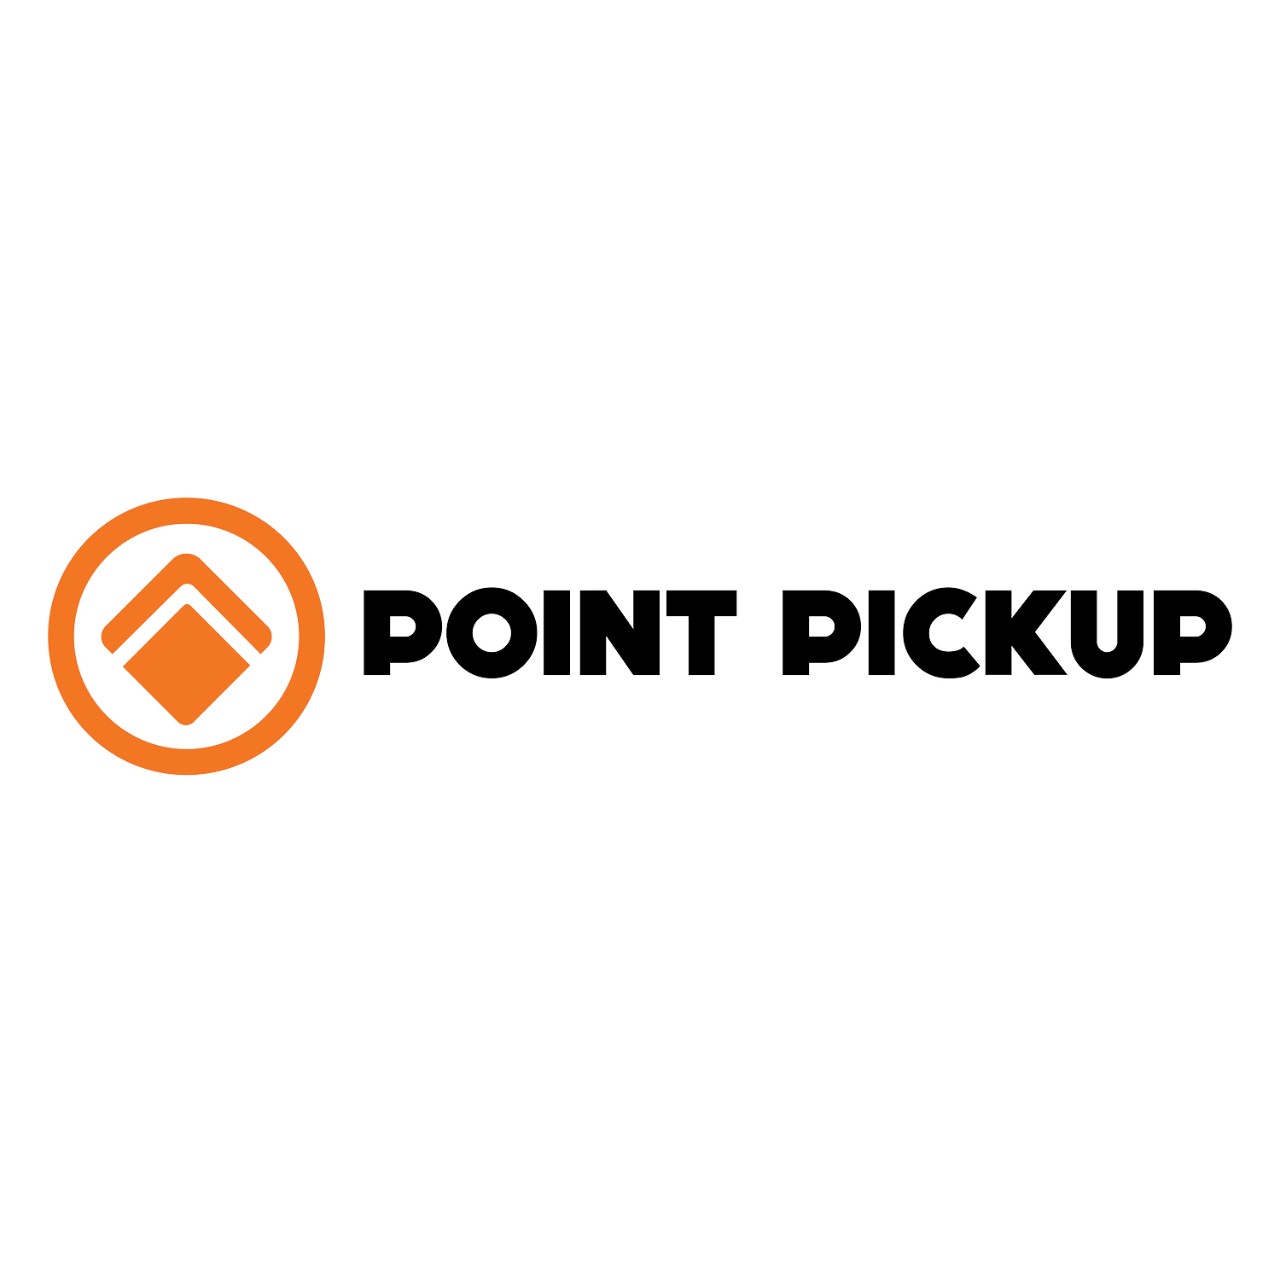 Point Pickup logo written in black with an orange round icon on a white background